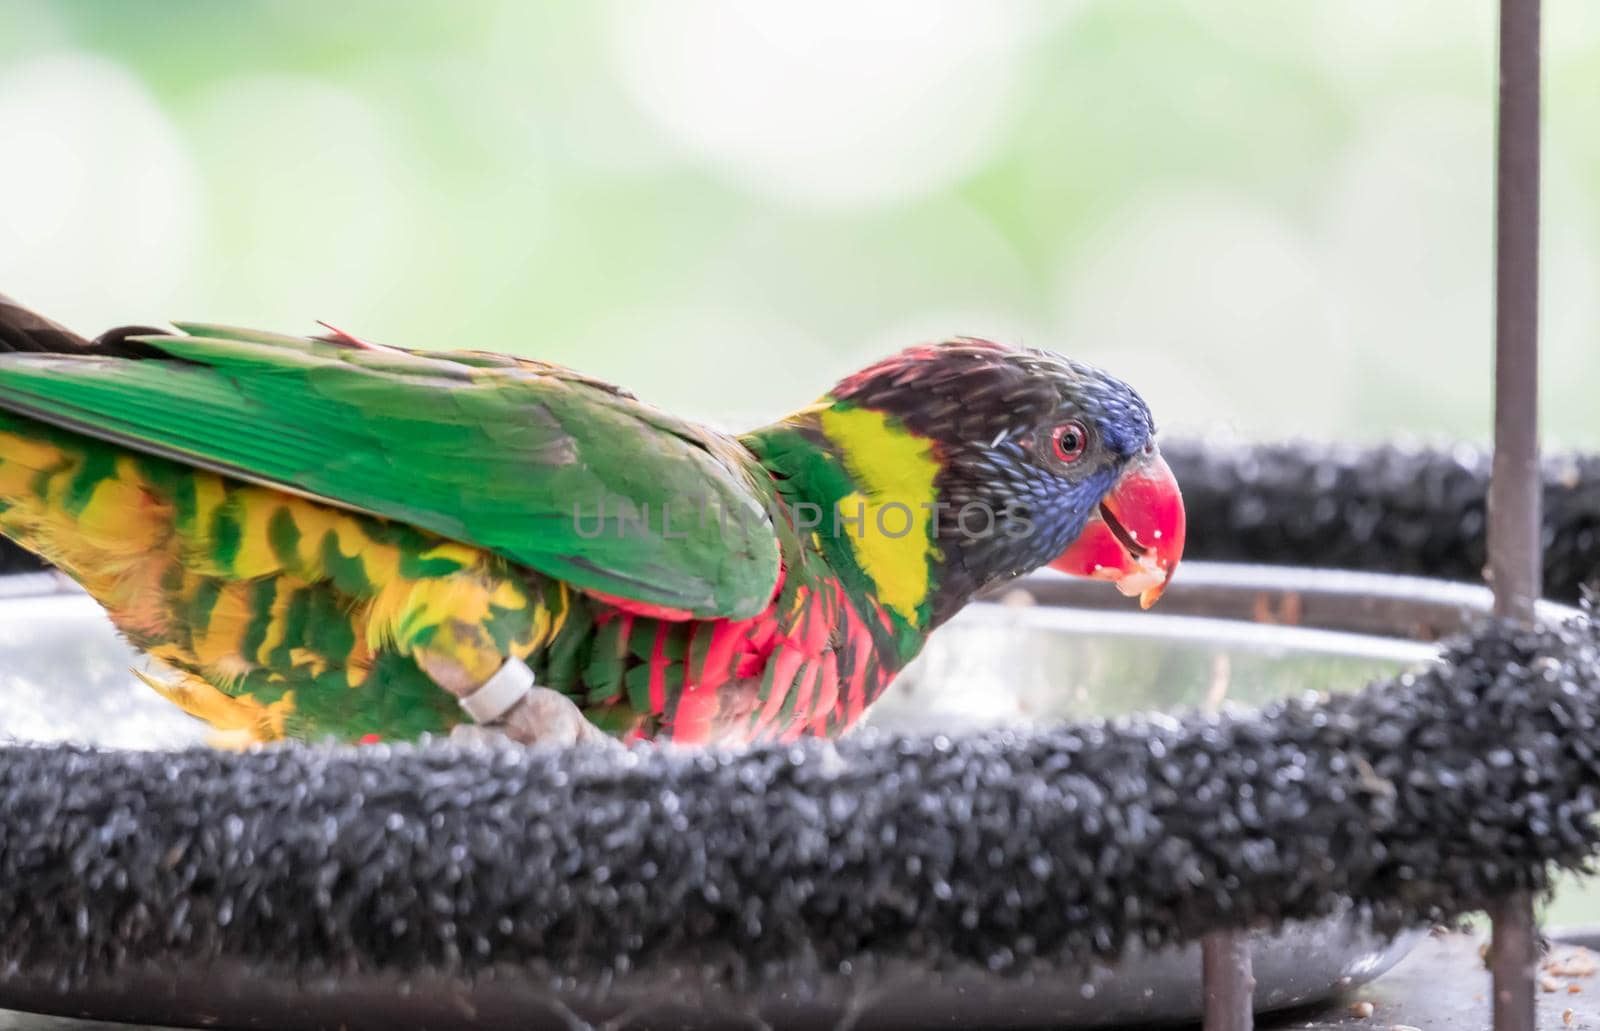 Rainbow lorikeet, Trichoglossus haematodus moluscanus, is beautifully colored parrot by billroque